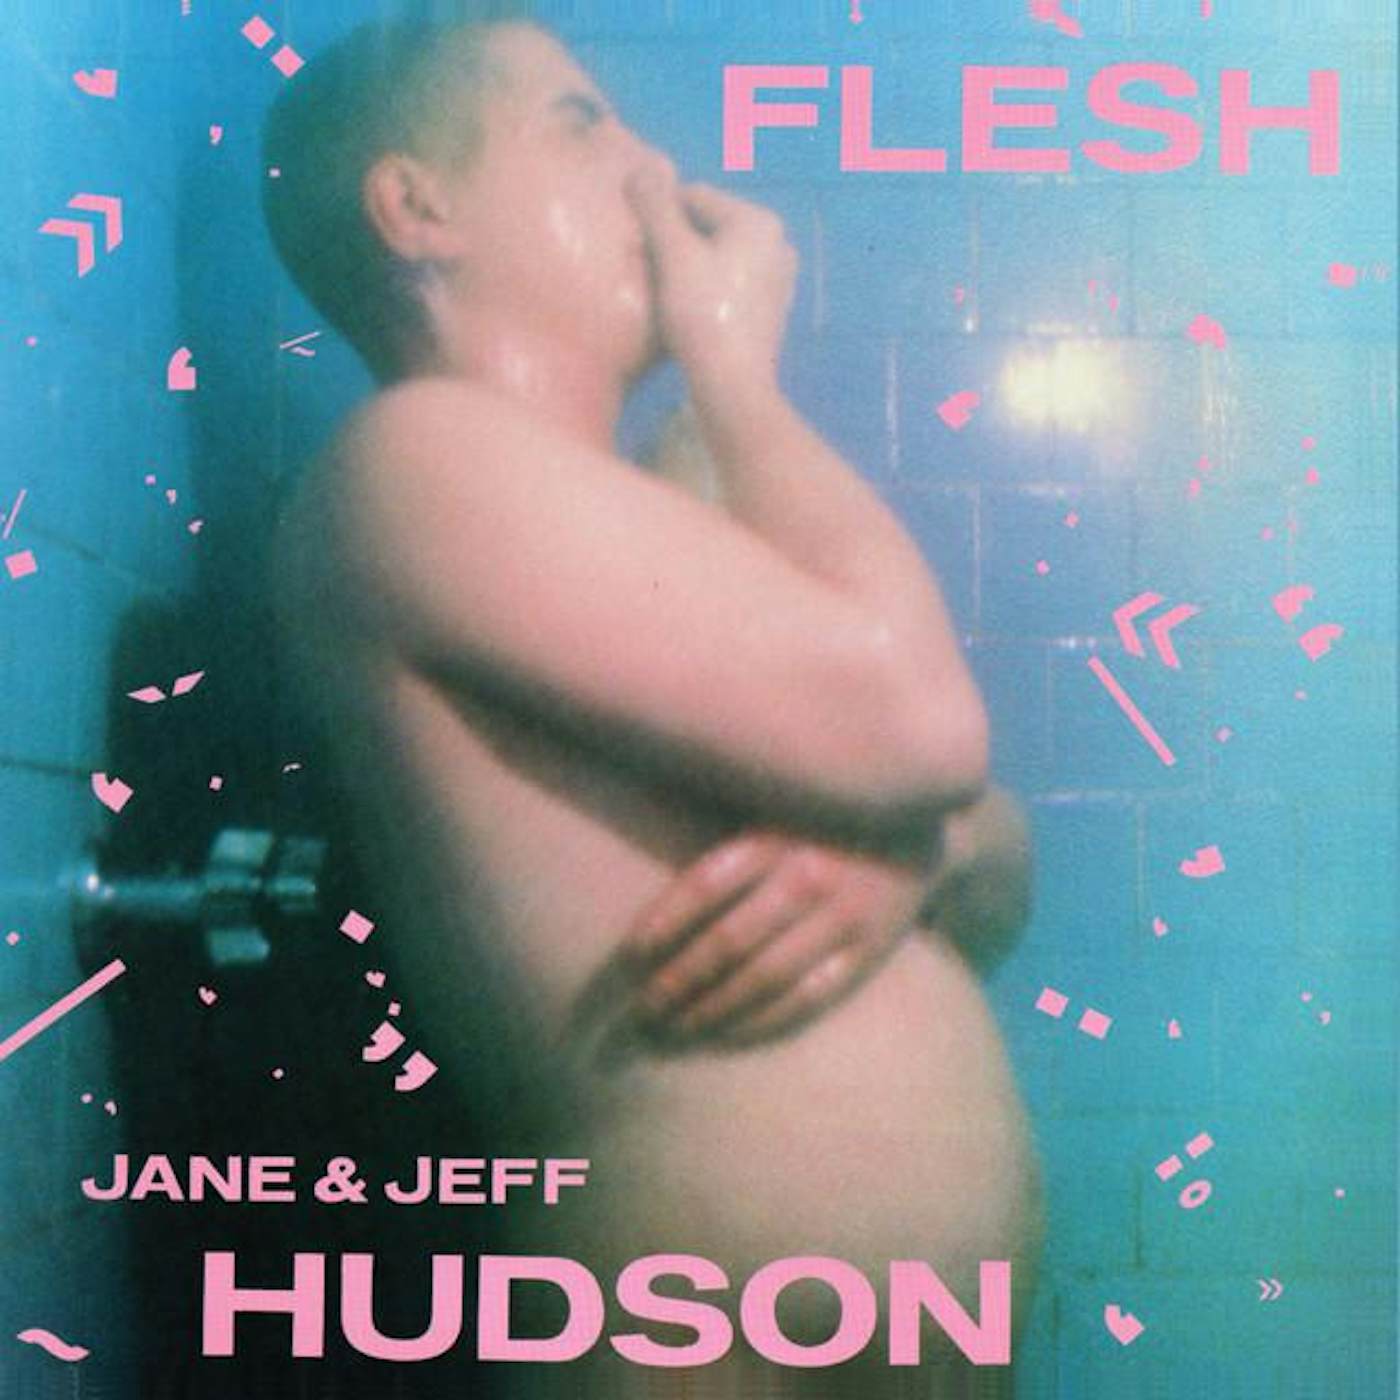 Jeff & Jane Hudson